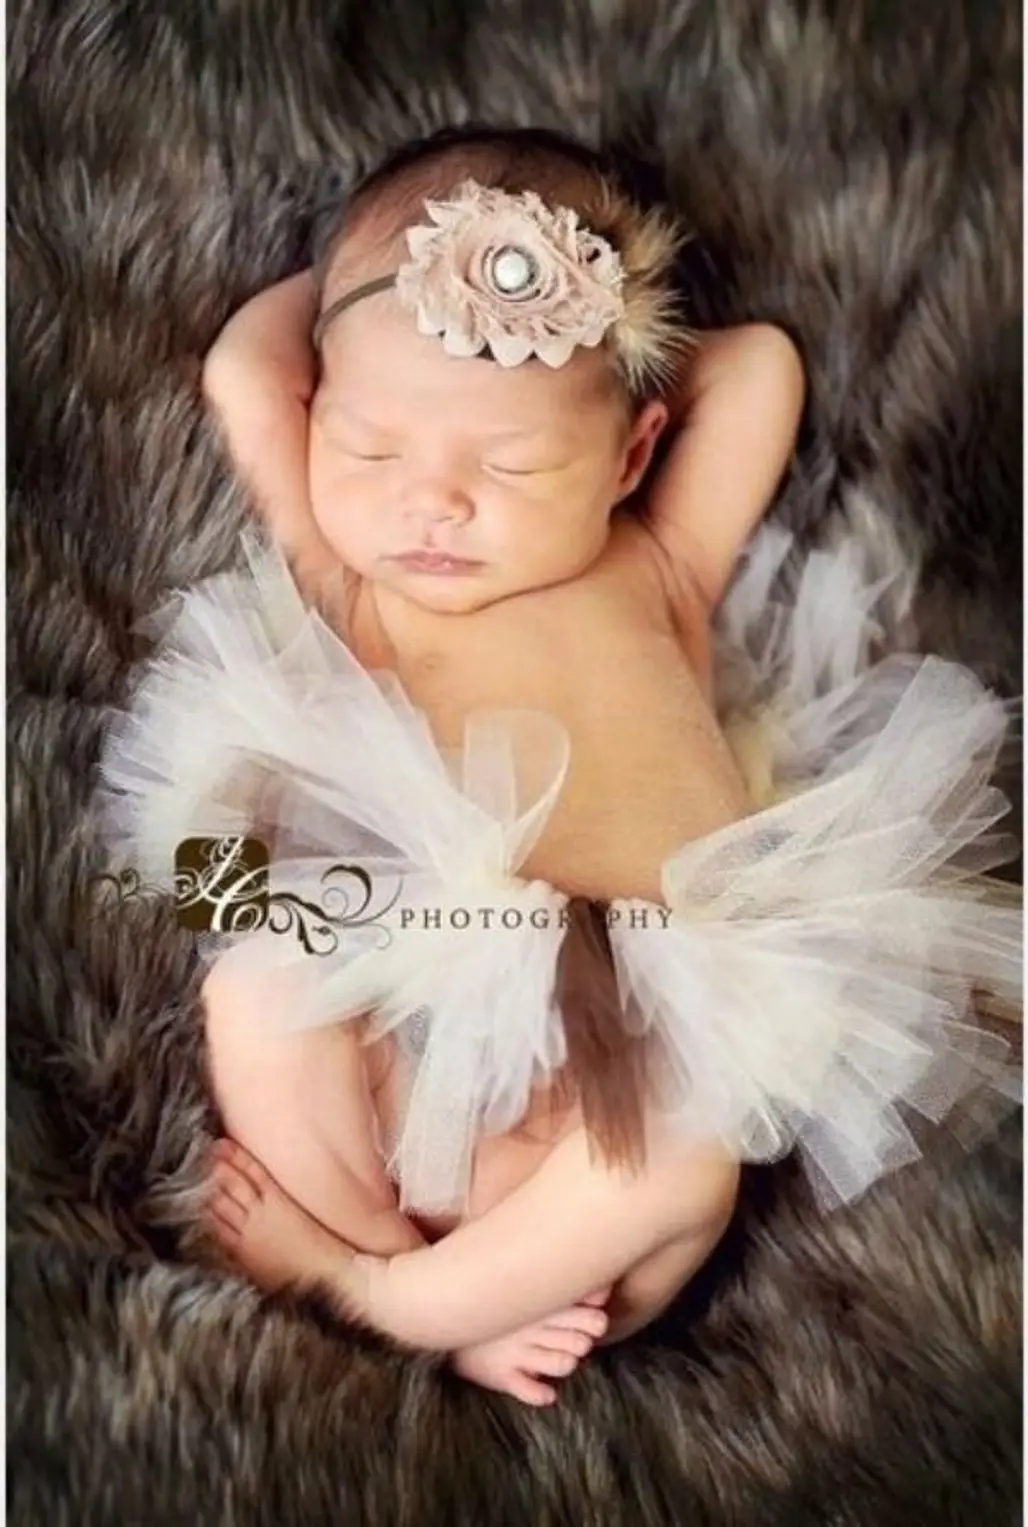 29 Wonderful Newborn Photo Poses You Won't Want to Pass up